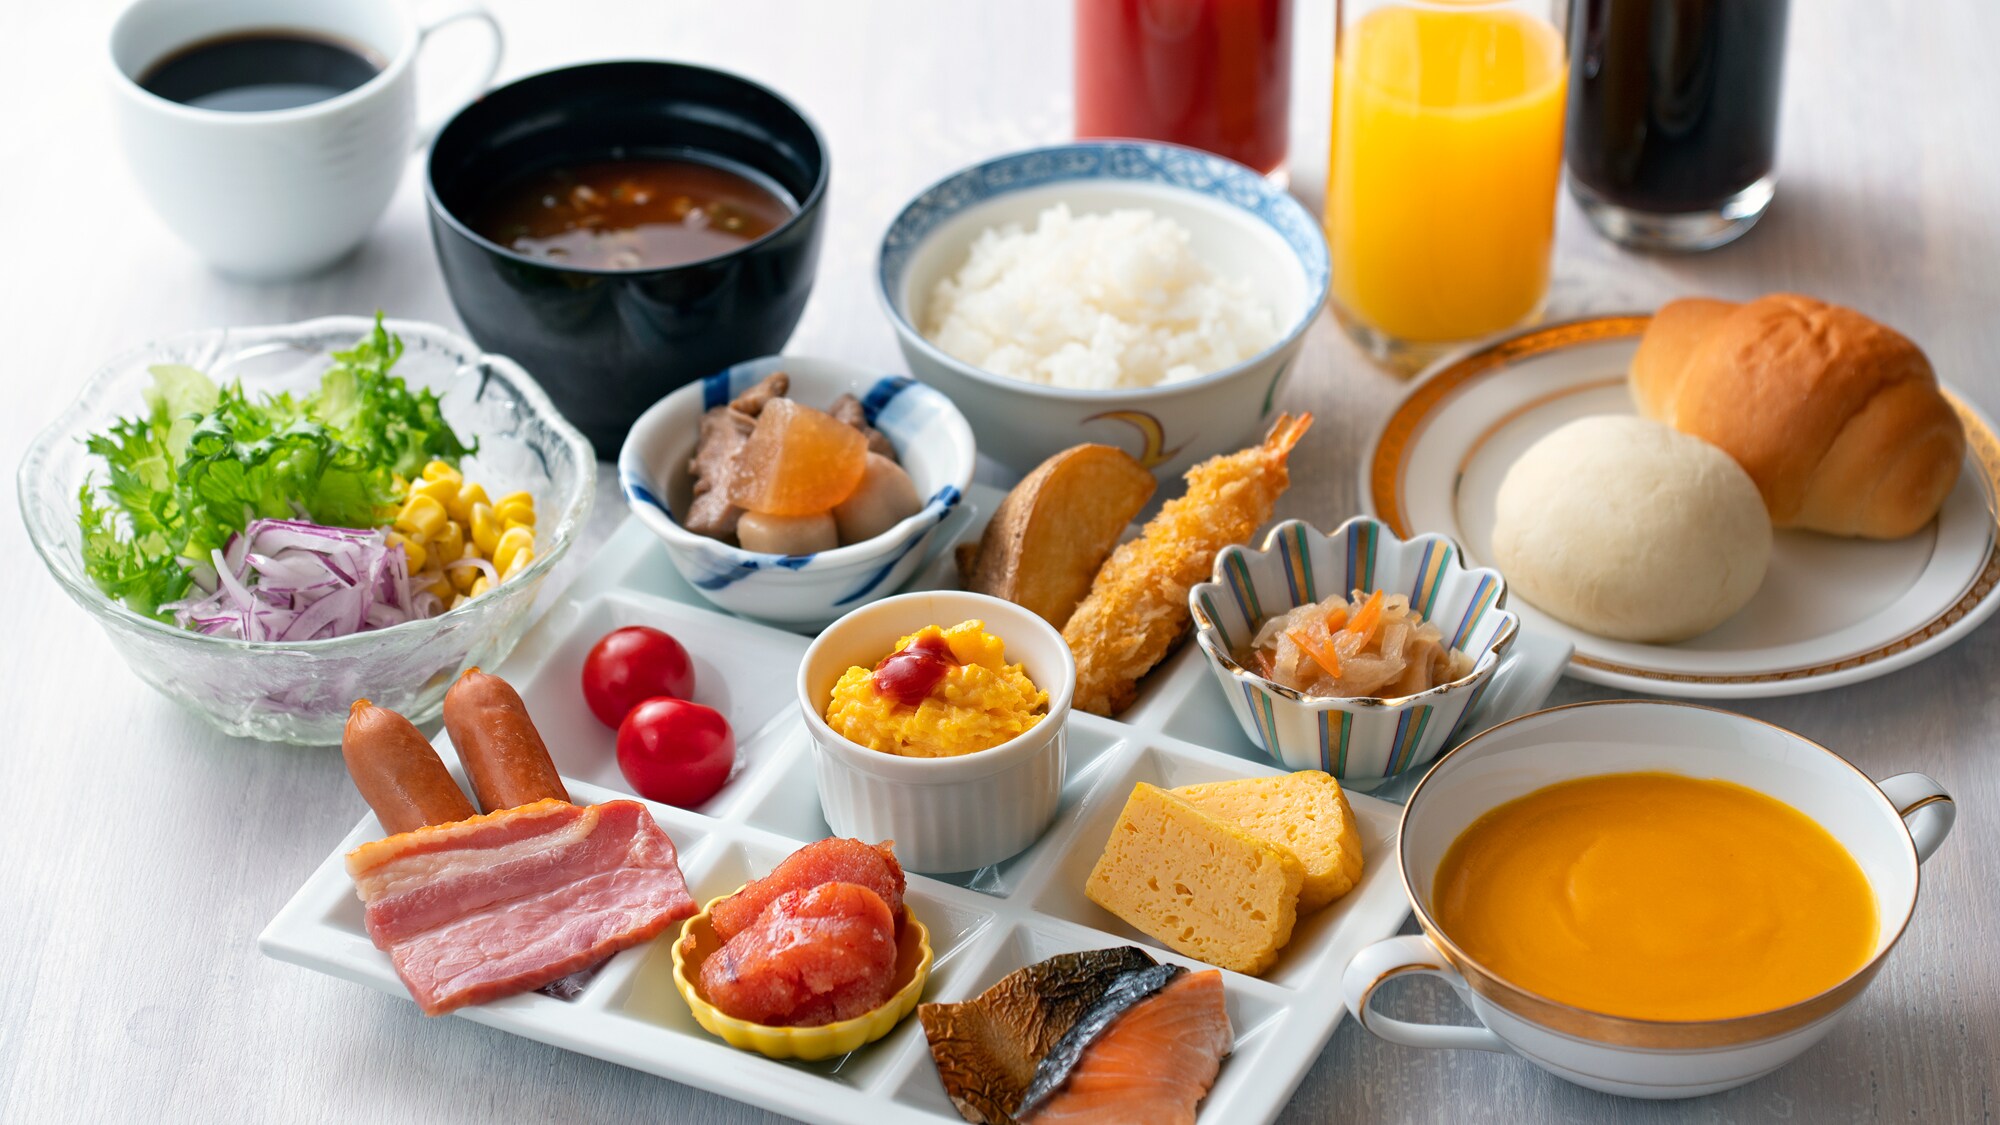 [Rencana sarapan] Gambar sarapan 01